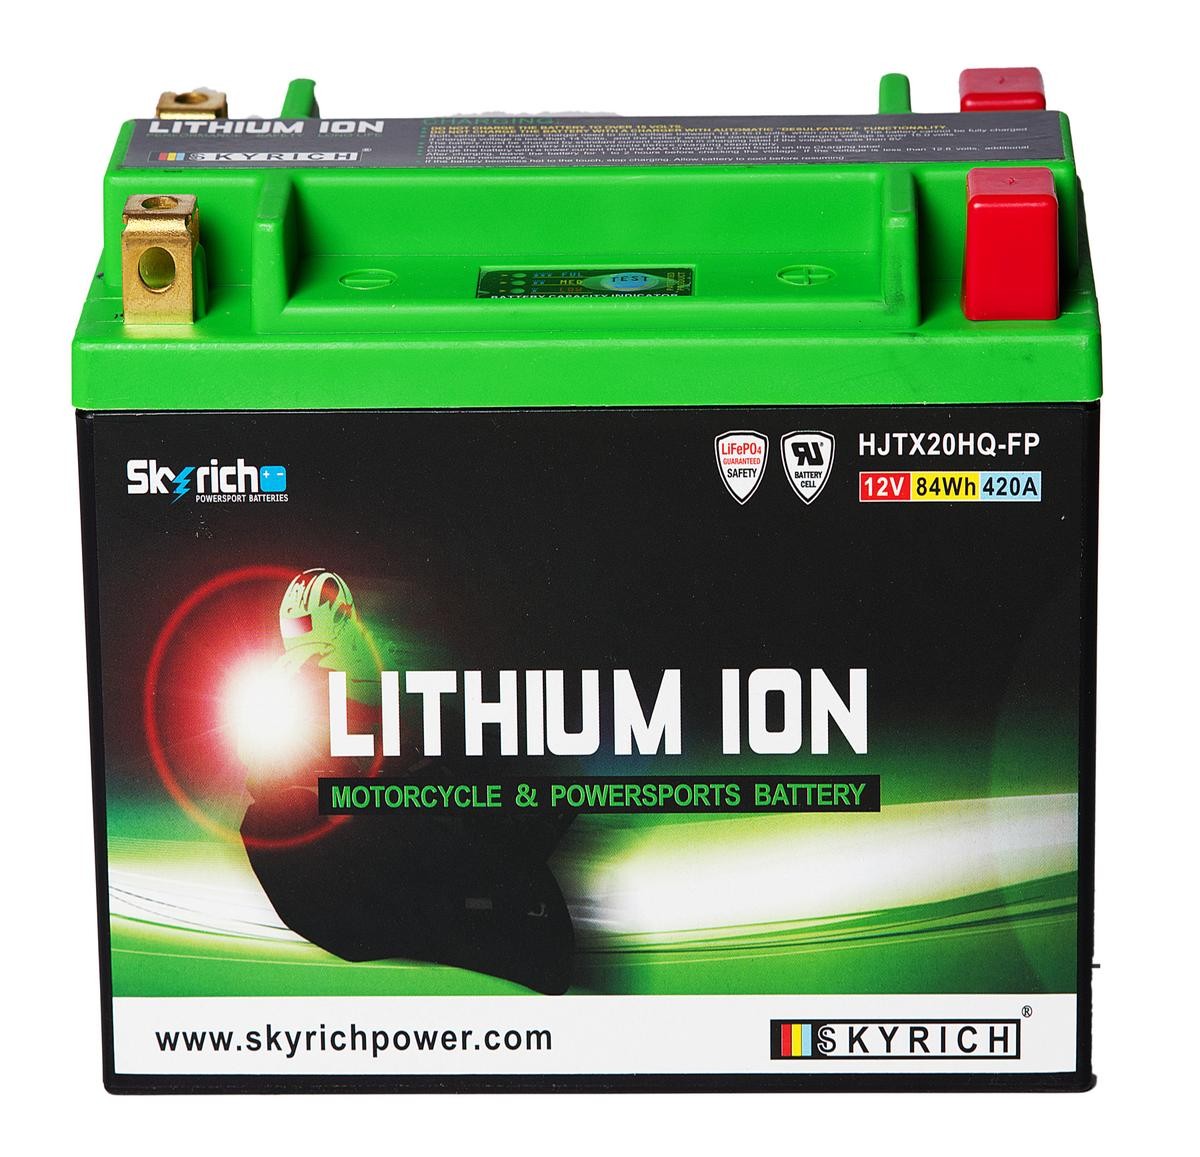 HARLEY-DAVIDSON FAT BOY Batterie 12V 7Ah 420A N Li-Ionen-Batterie SKYRICH LITHIUM ION HJTX20HQ-FP